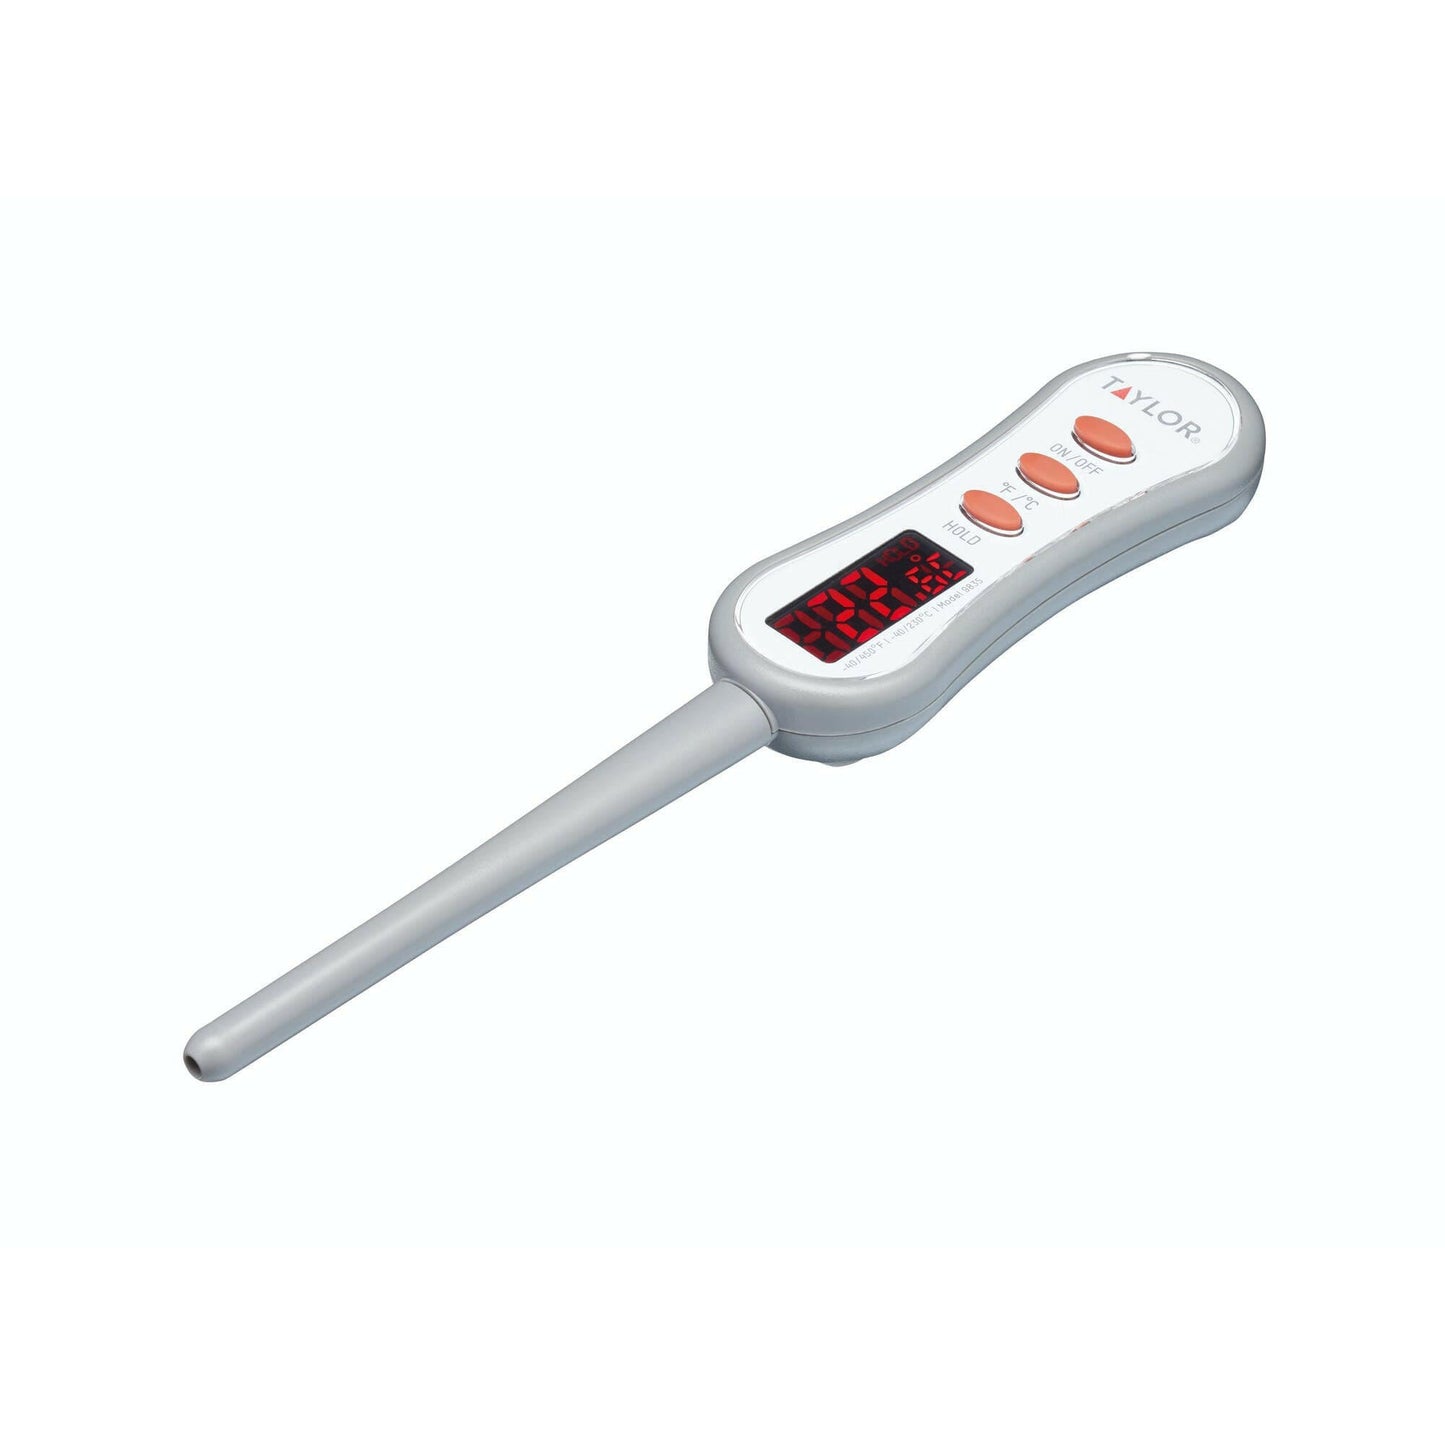 Taylor Pro Digital Step Stem Thermometer